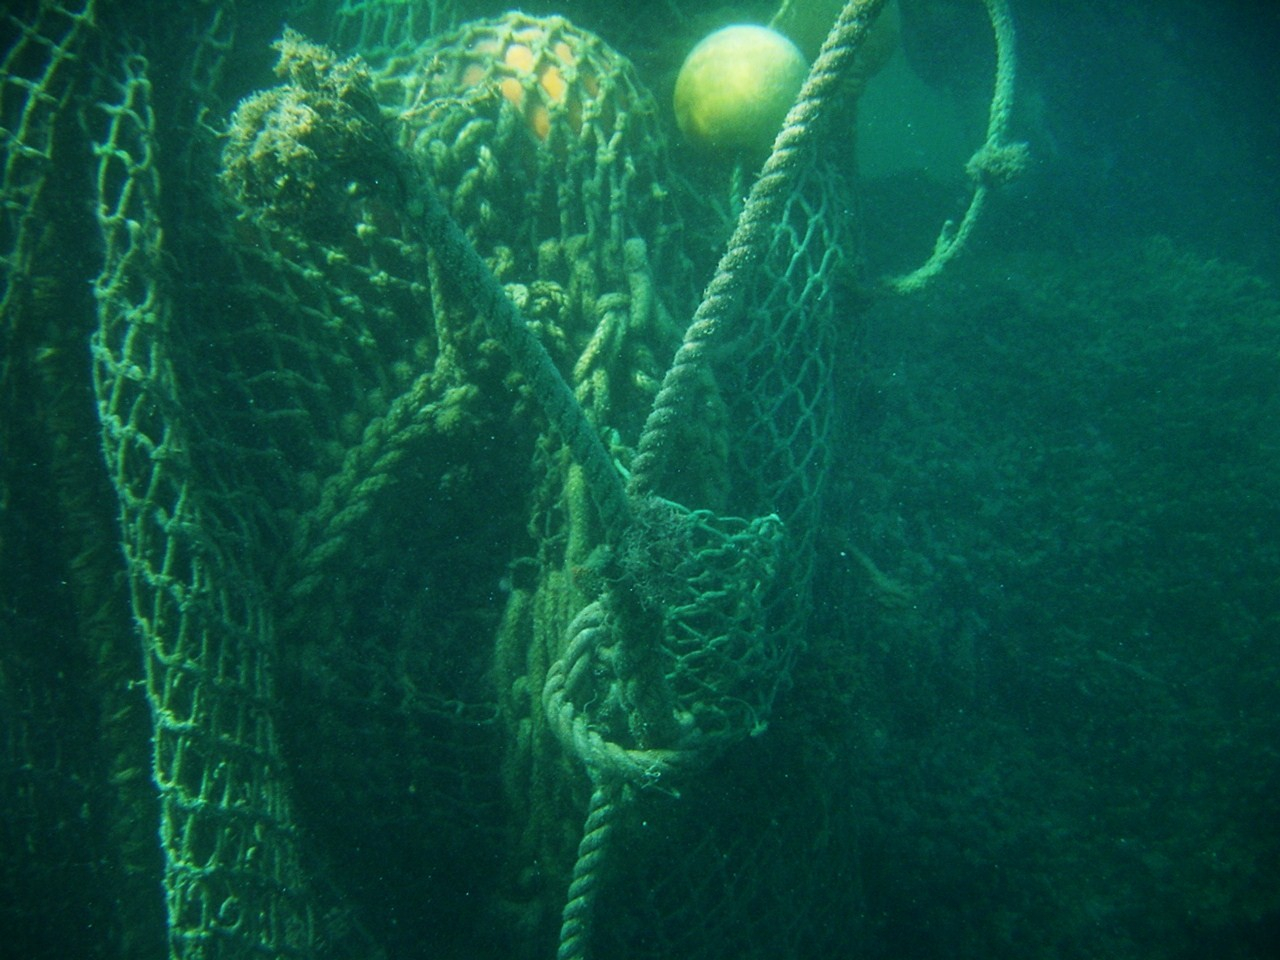 Large derelict net entangled on reef